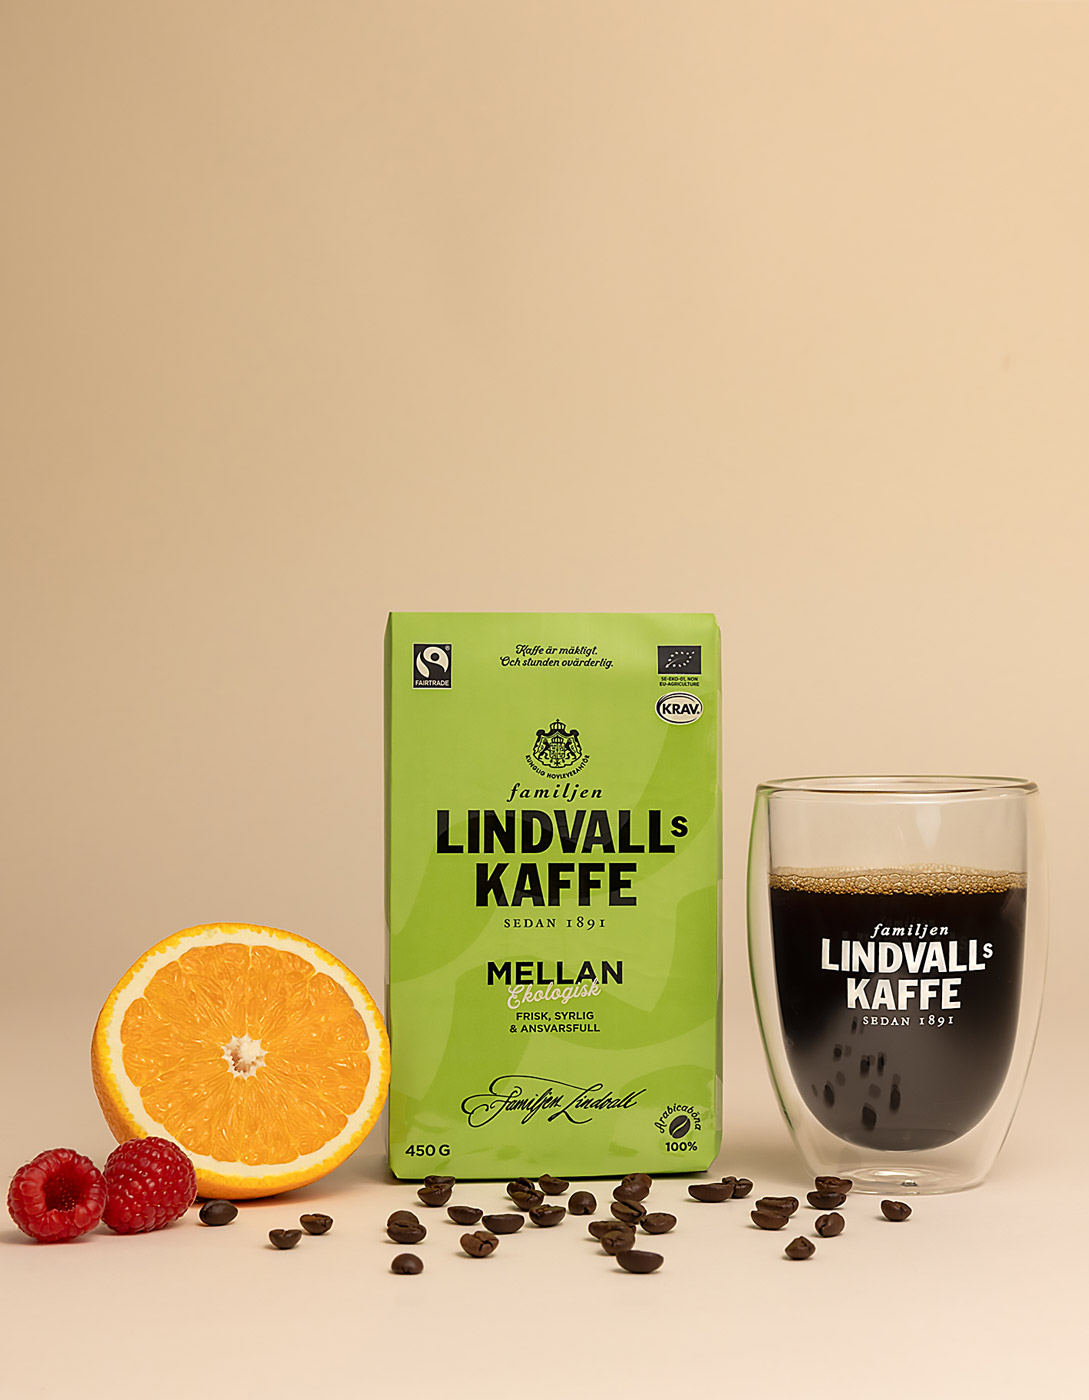 Lindvalls kaffe